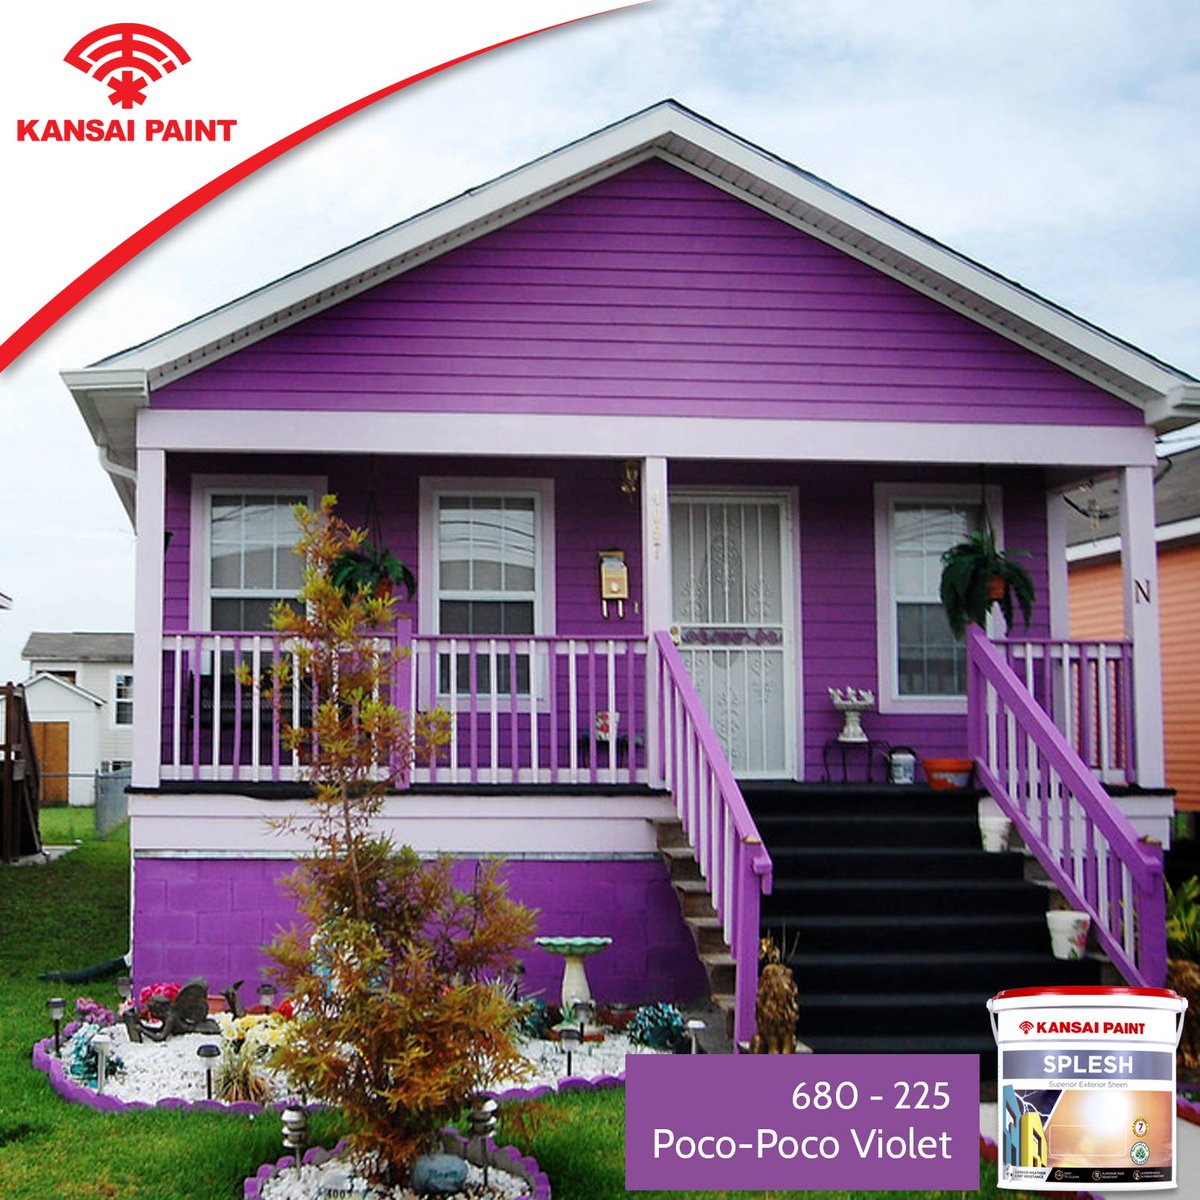 Colouring Your Life on Twitter: "Menggunakan cat warna ungu pada rumah